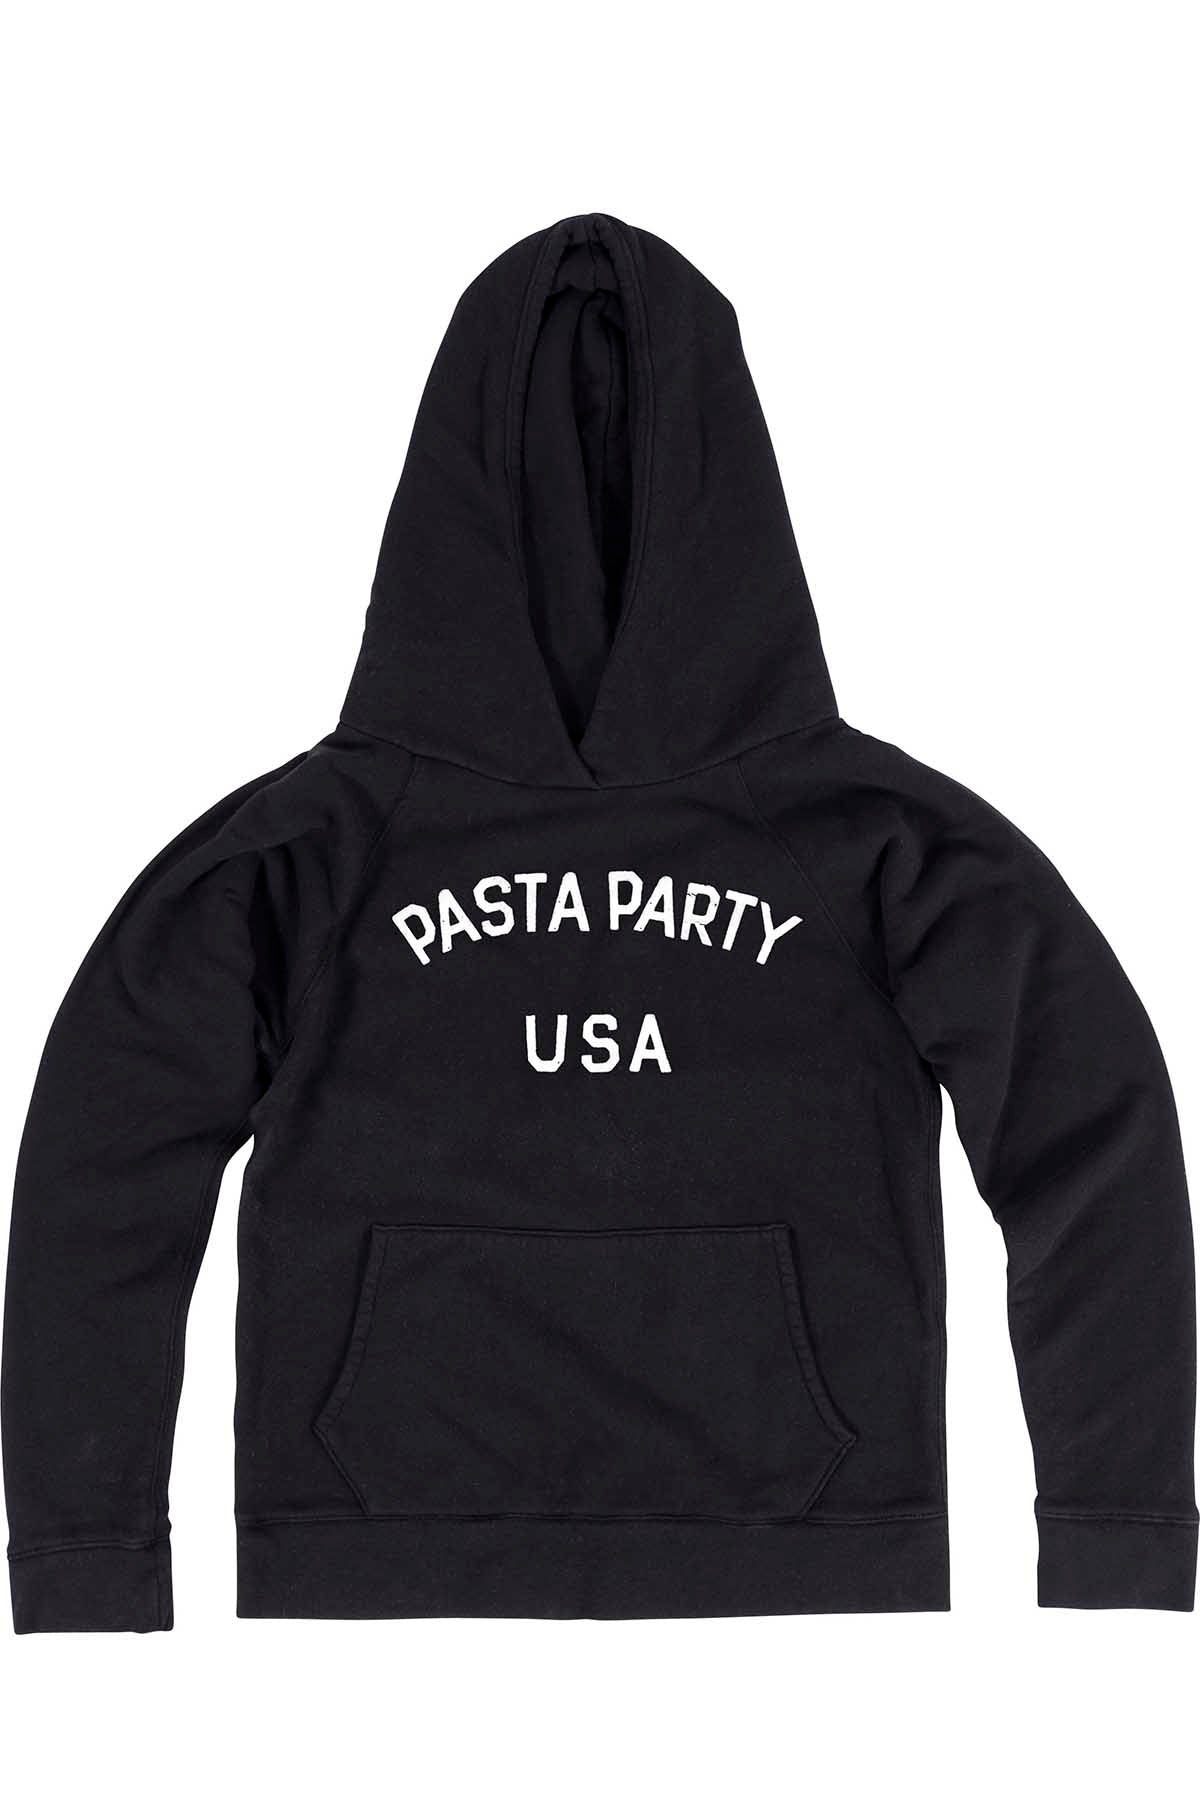 Rxmance Unisex Black 'Pasta Party' Hoodie